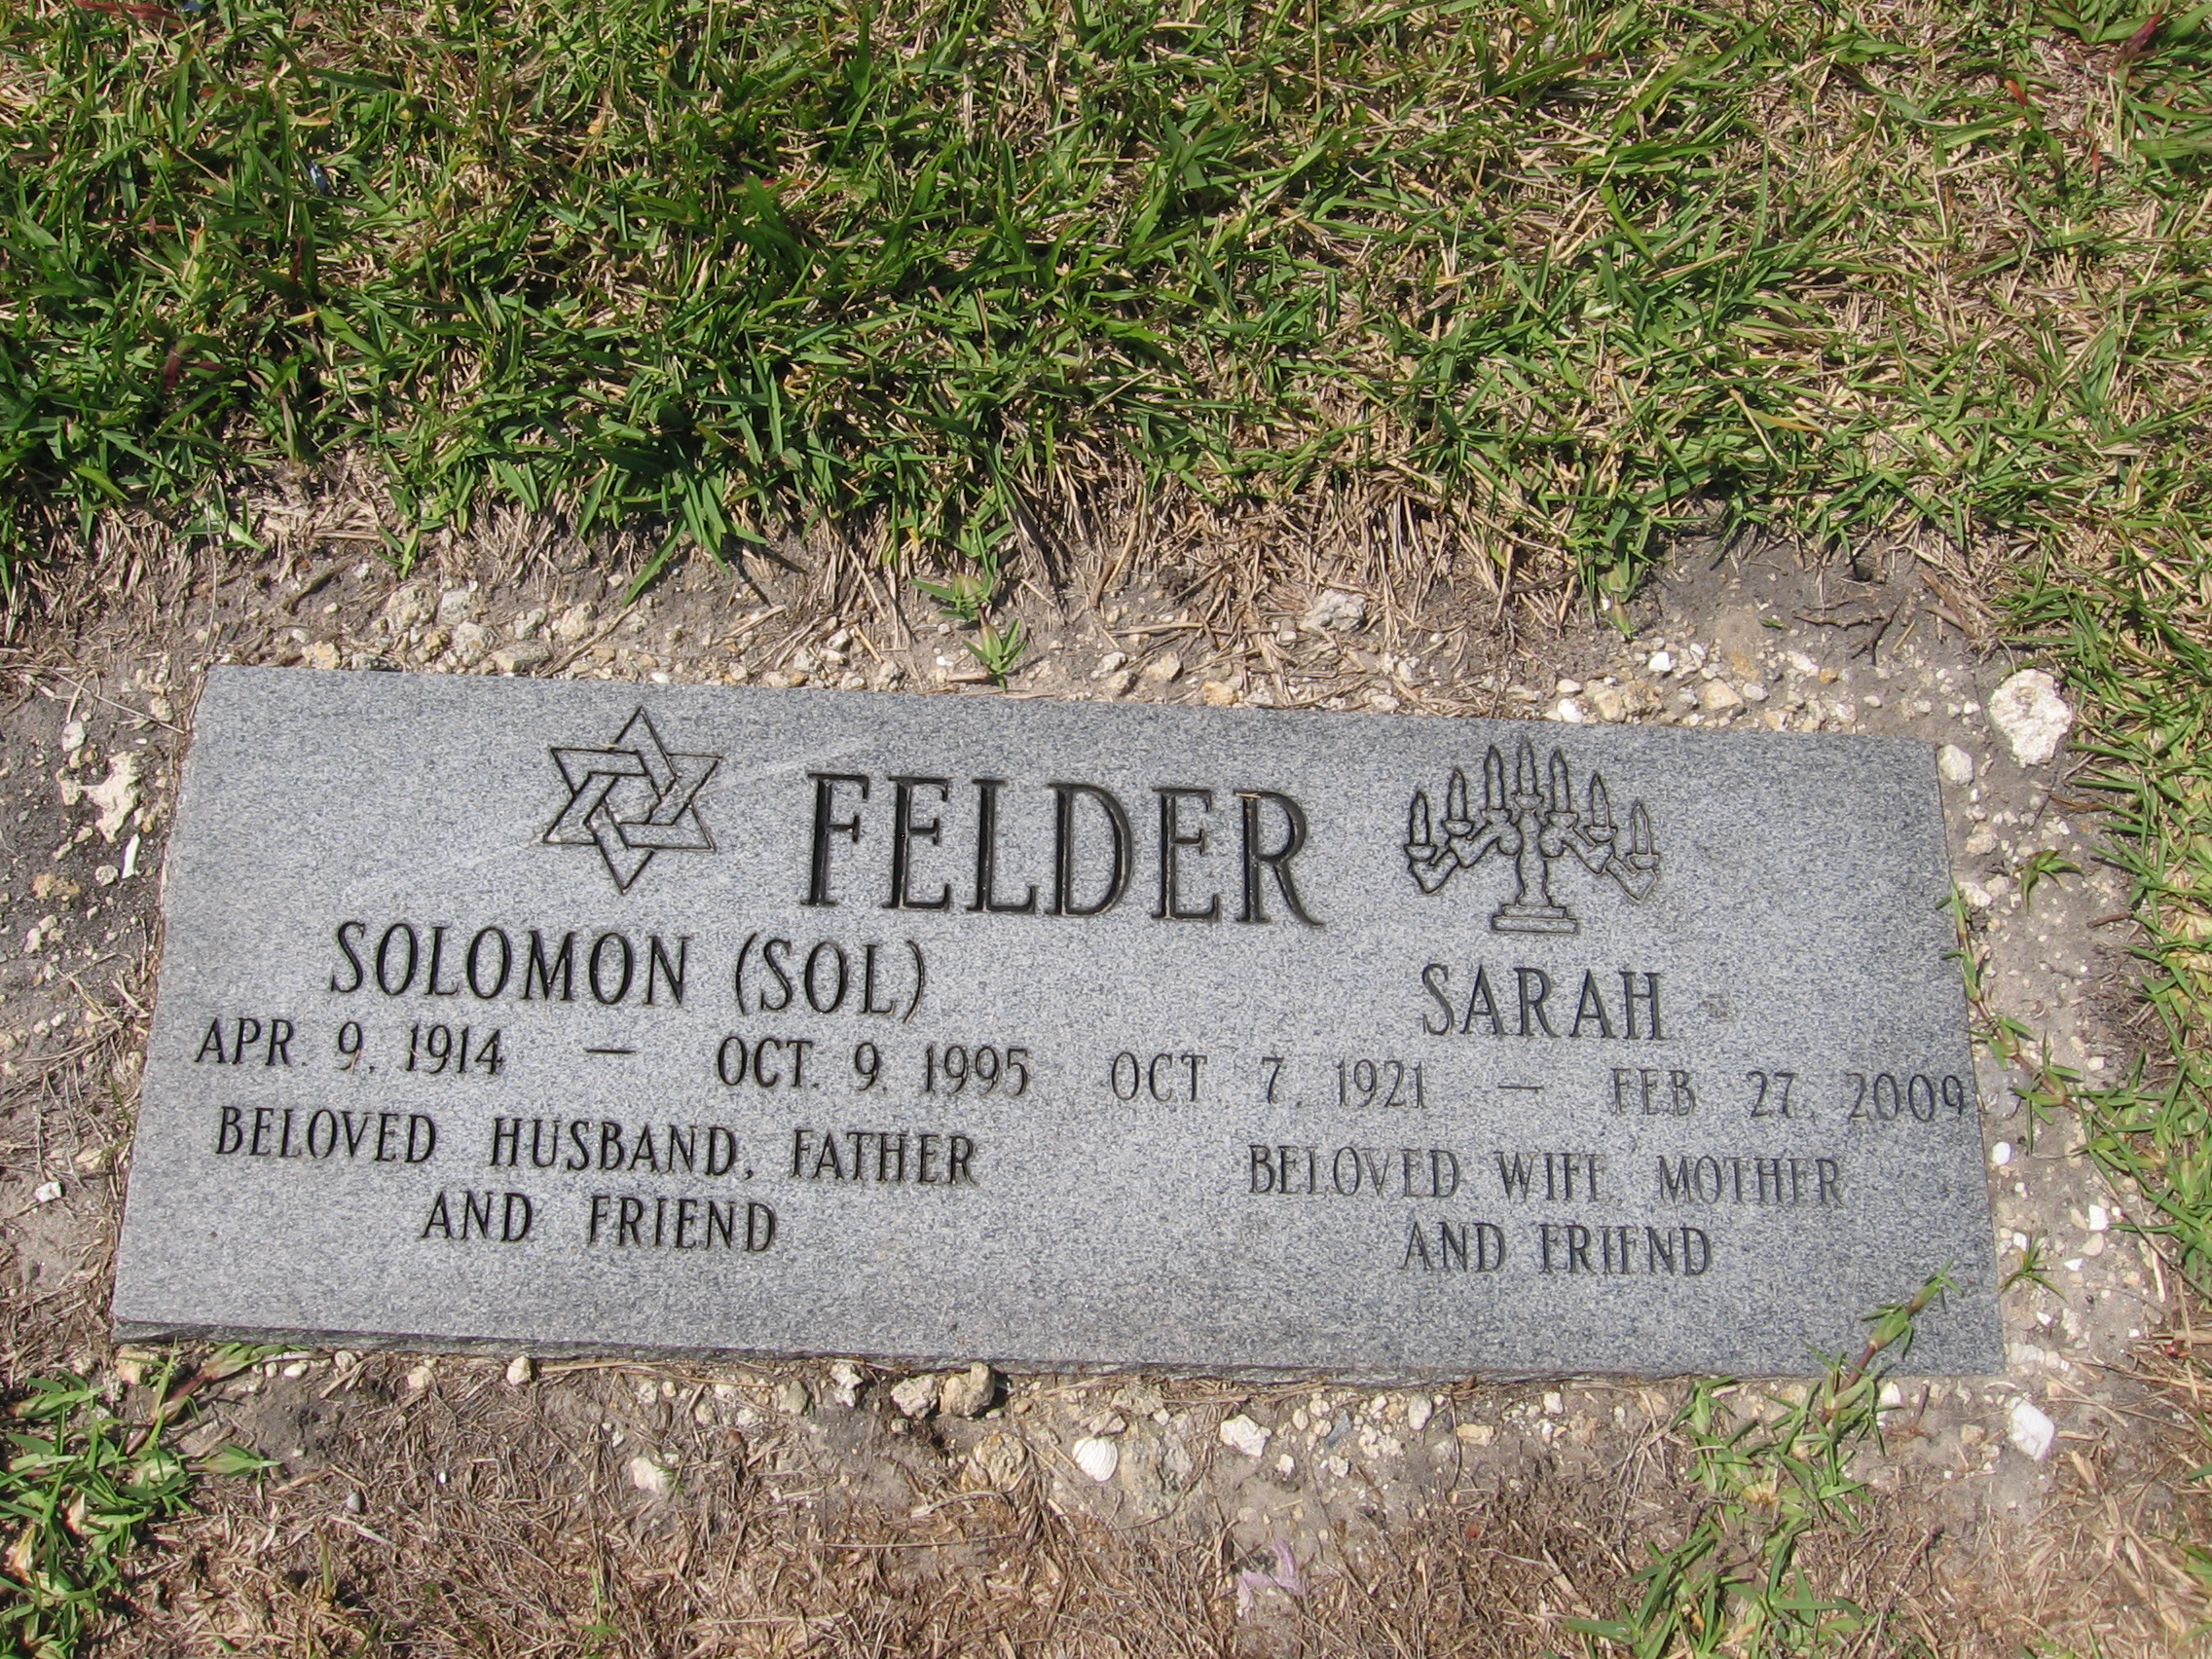 Solomon "Sol" Felder